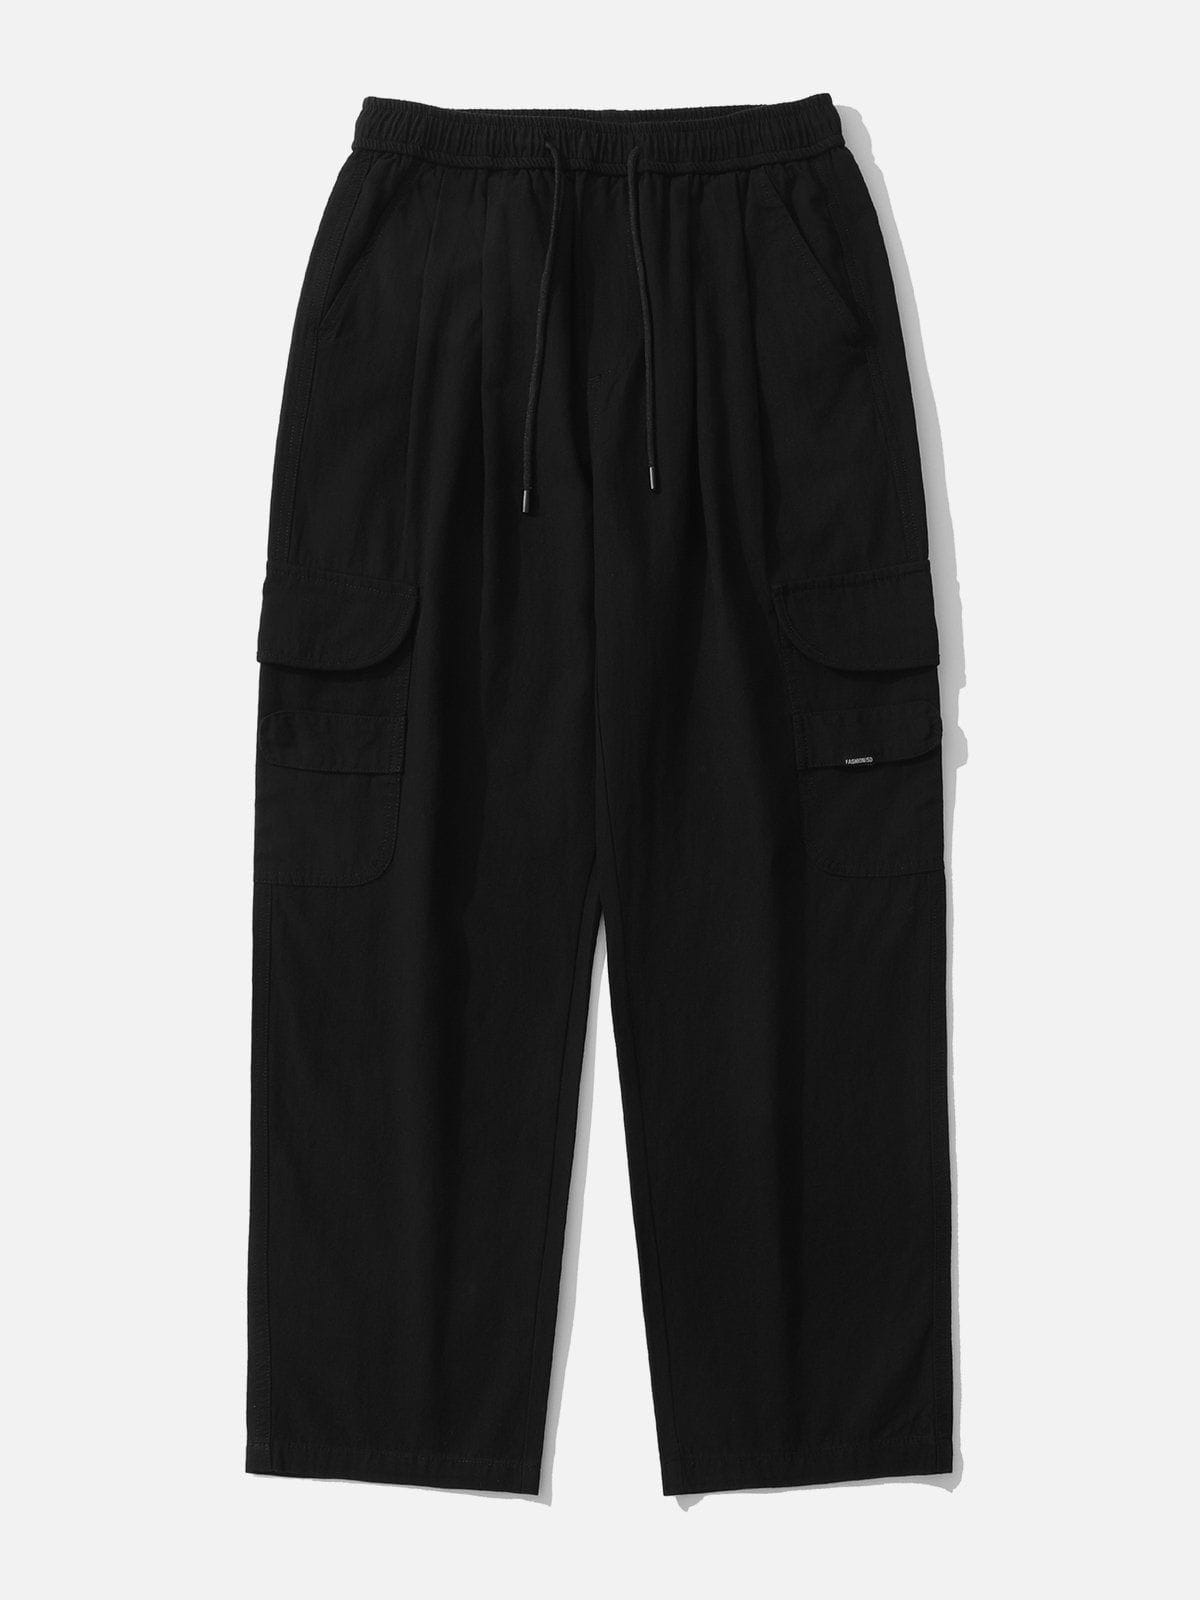 Majesda® - Solid Large Multi-Pocket Cargo Pants outfit ideas streetwear fashion